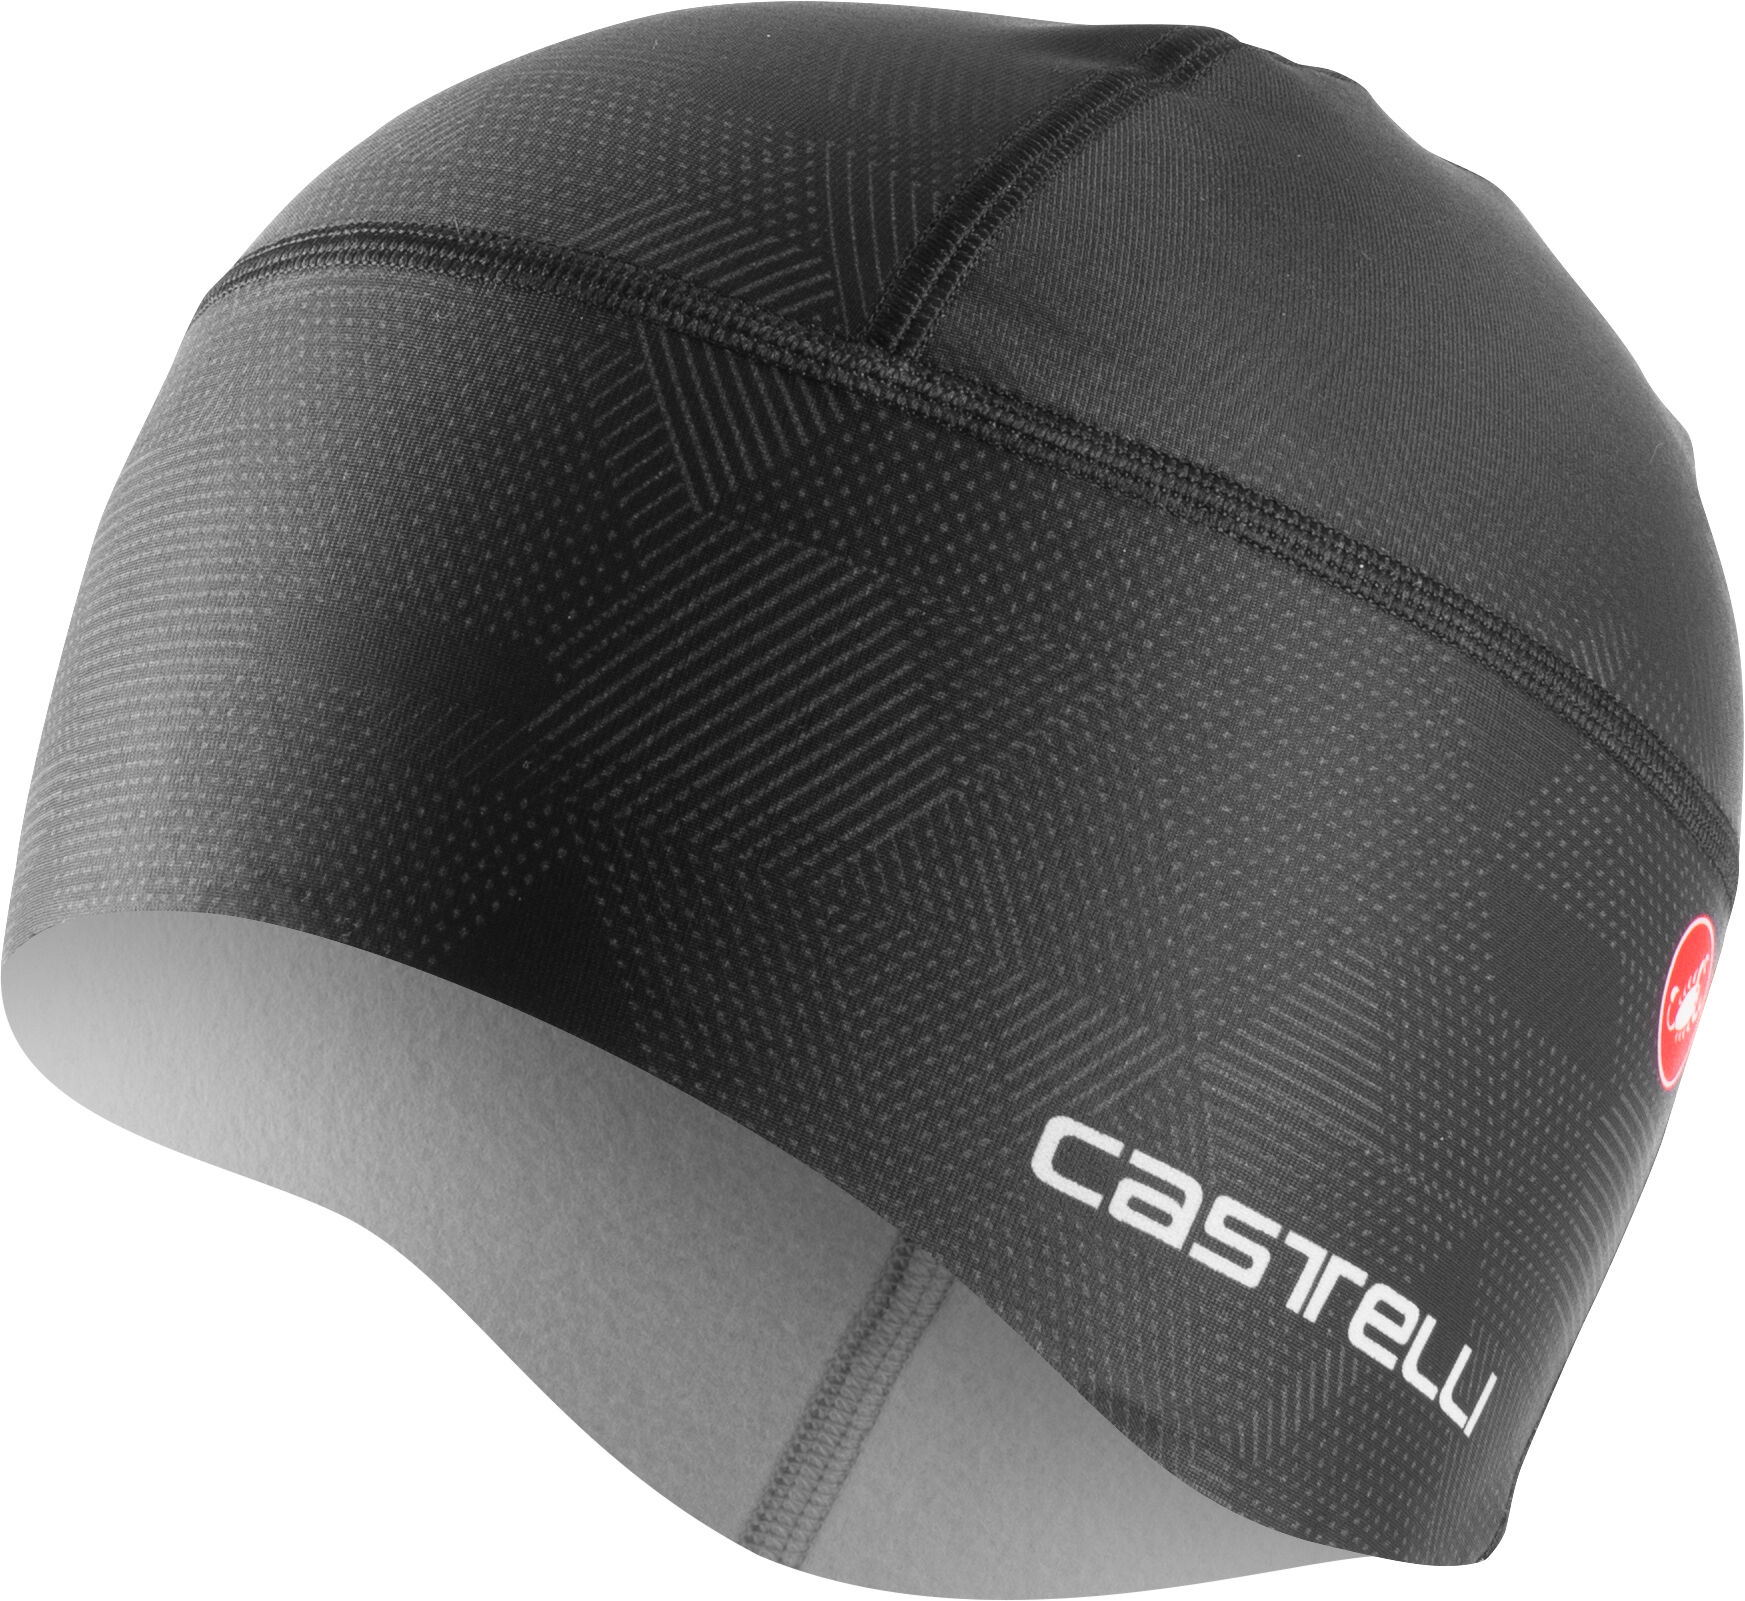 Castelli Sous-Casque Pro Thermal W - Headband - Women's